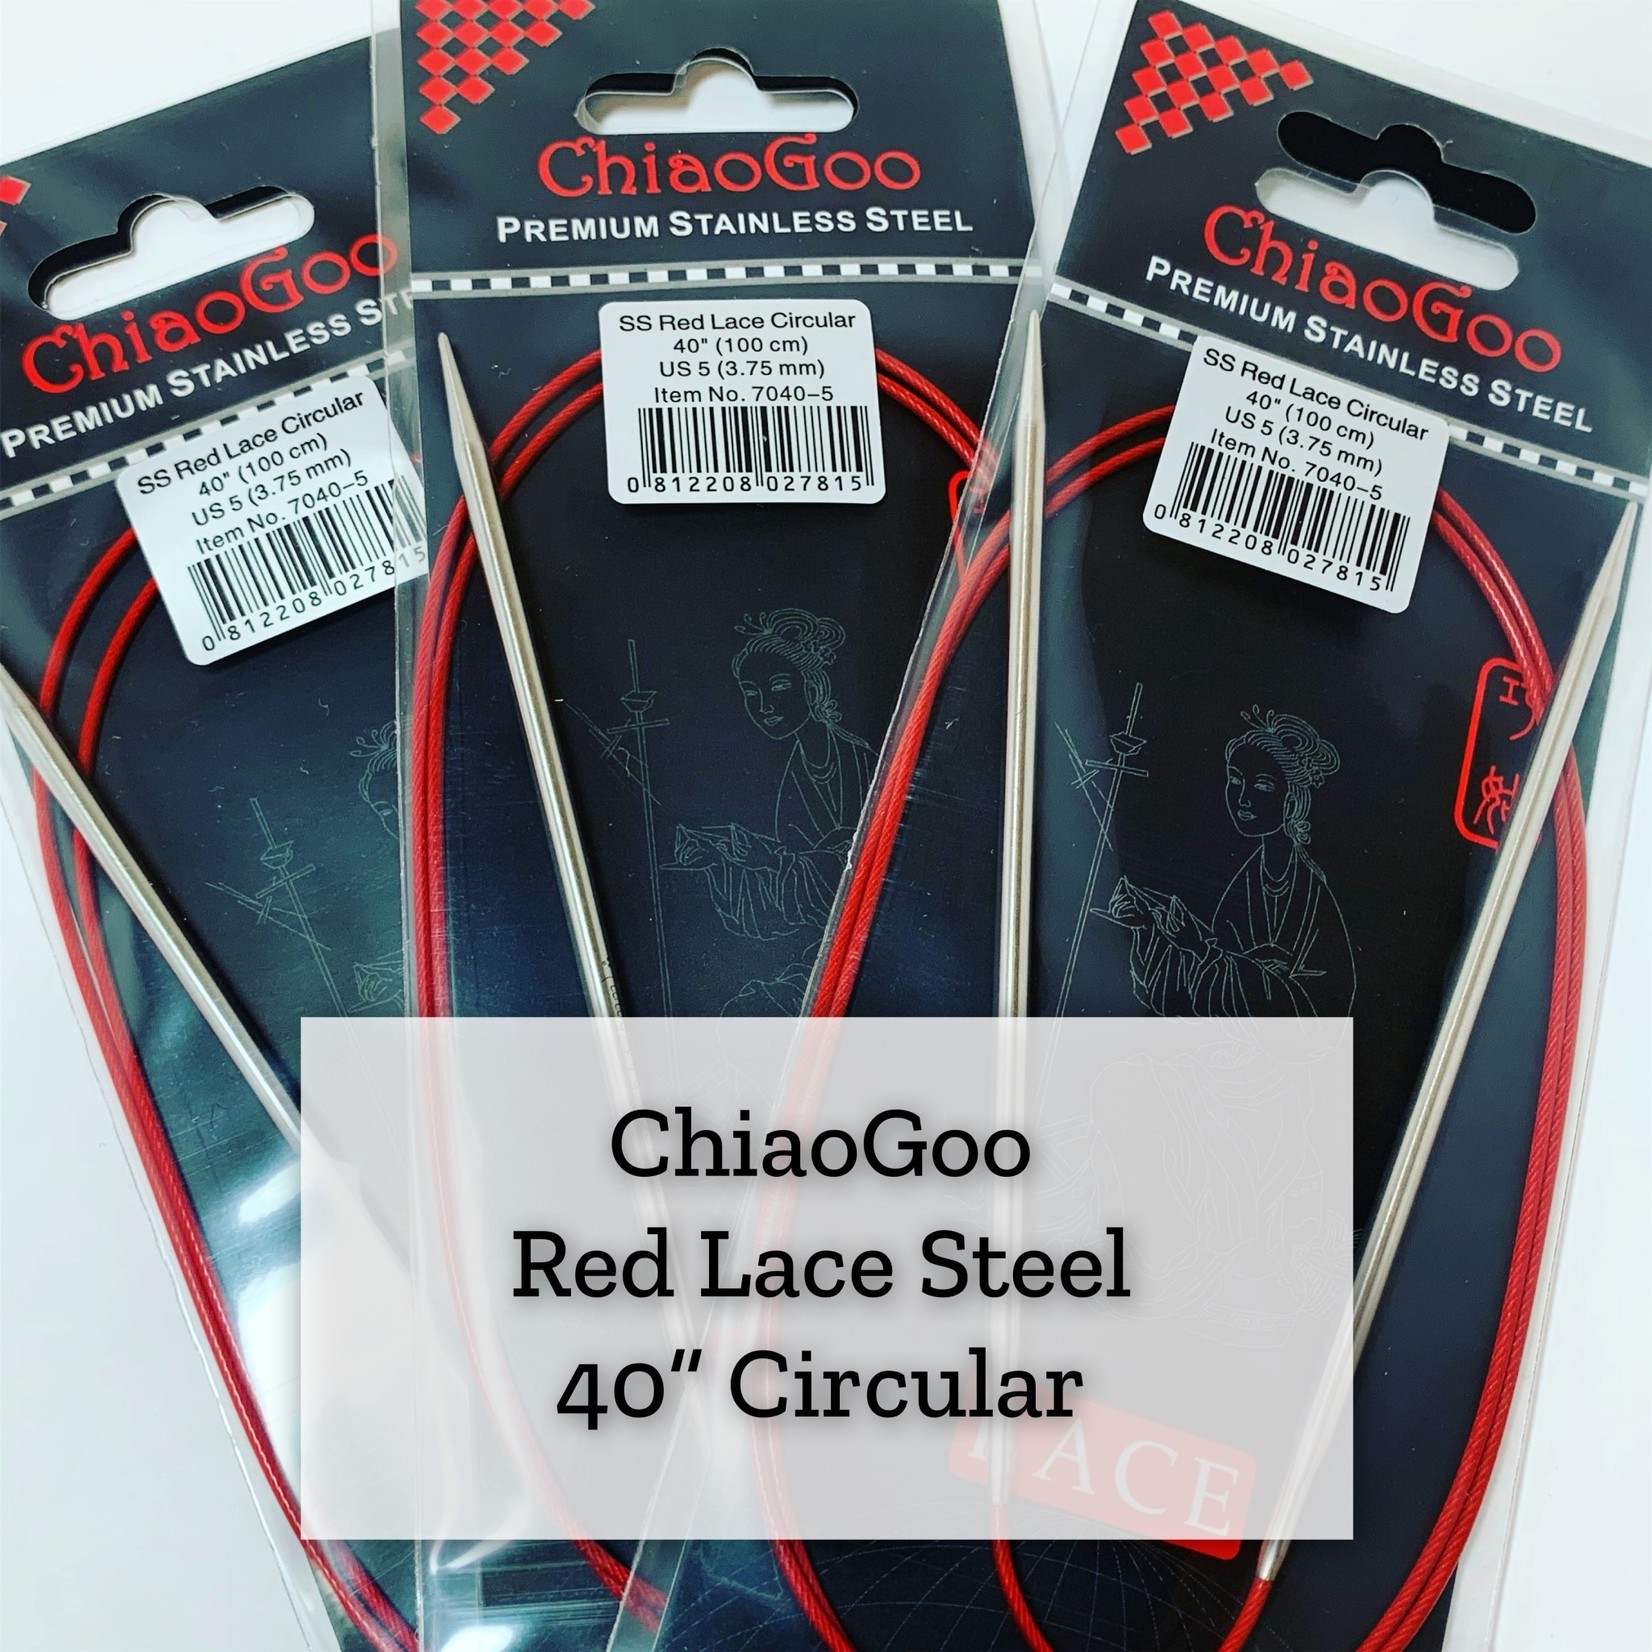 ChiaoGoo Red Lace Steel - 40" 3 mm